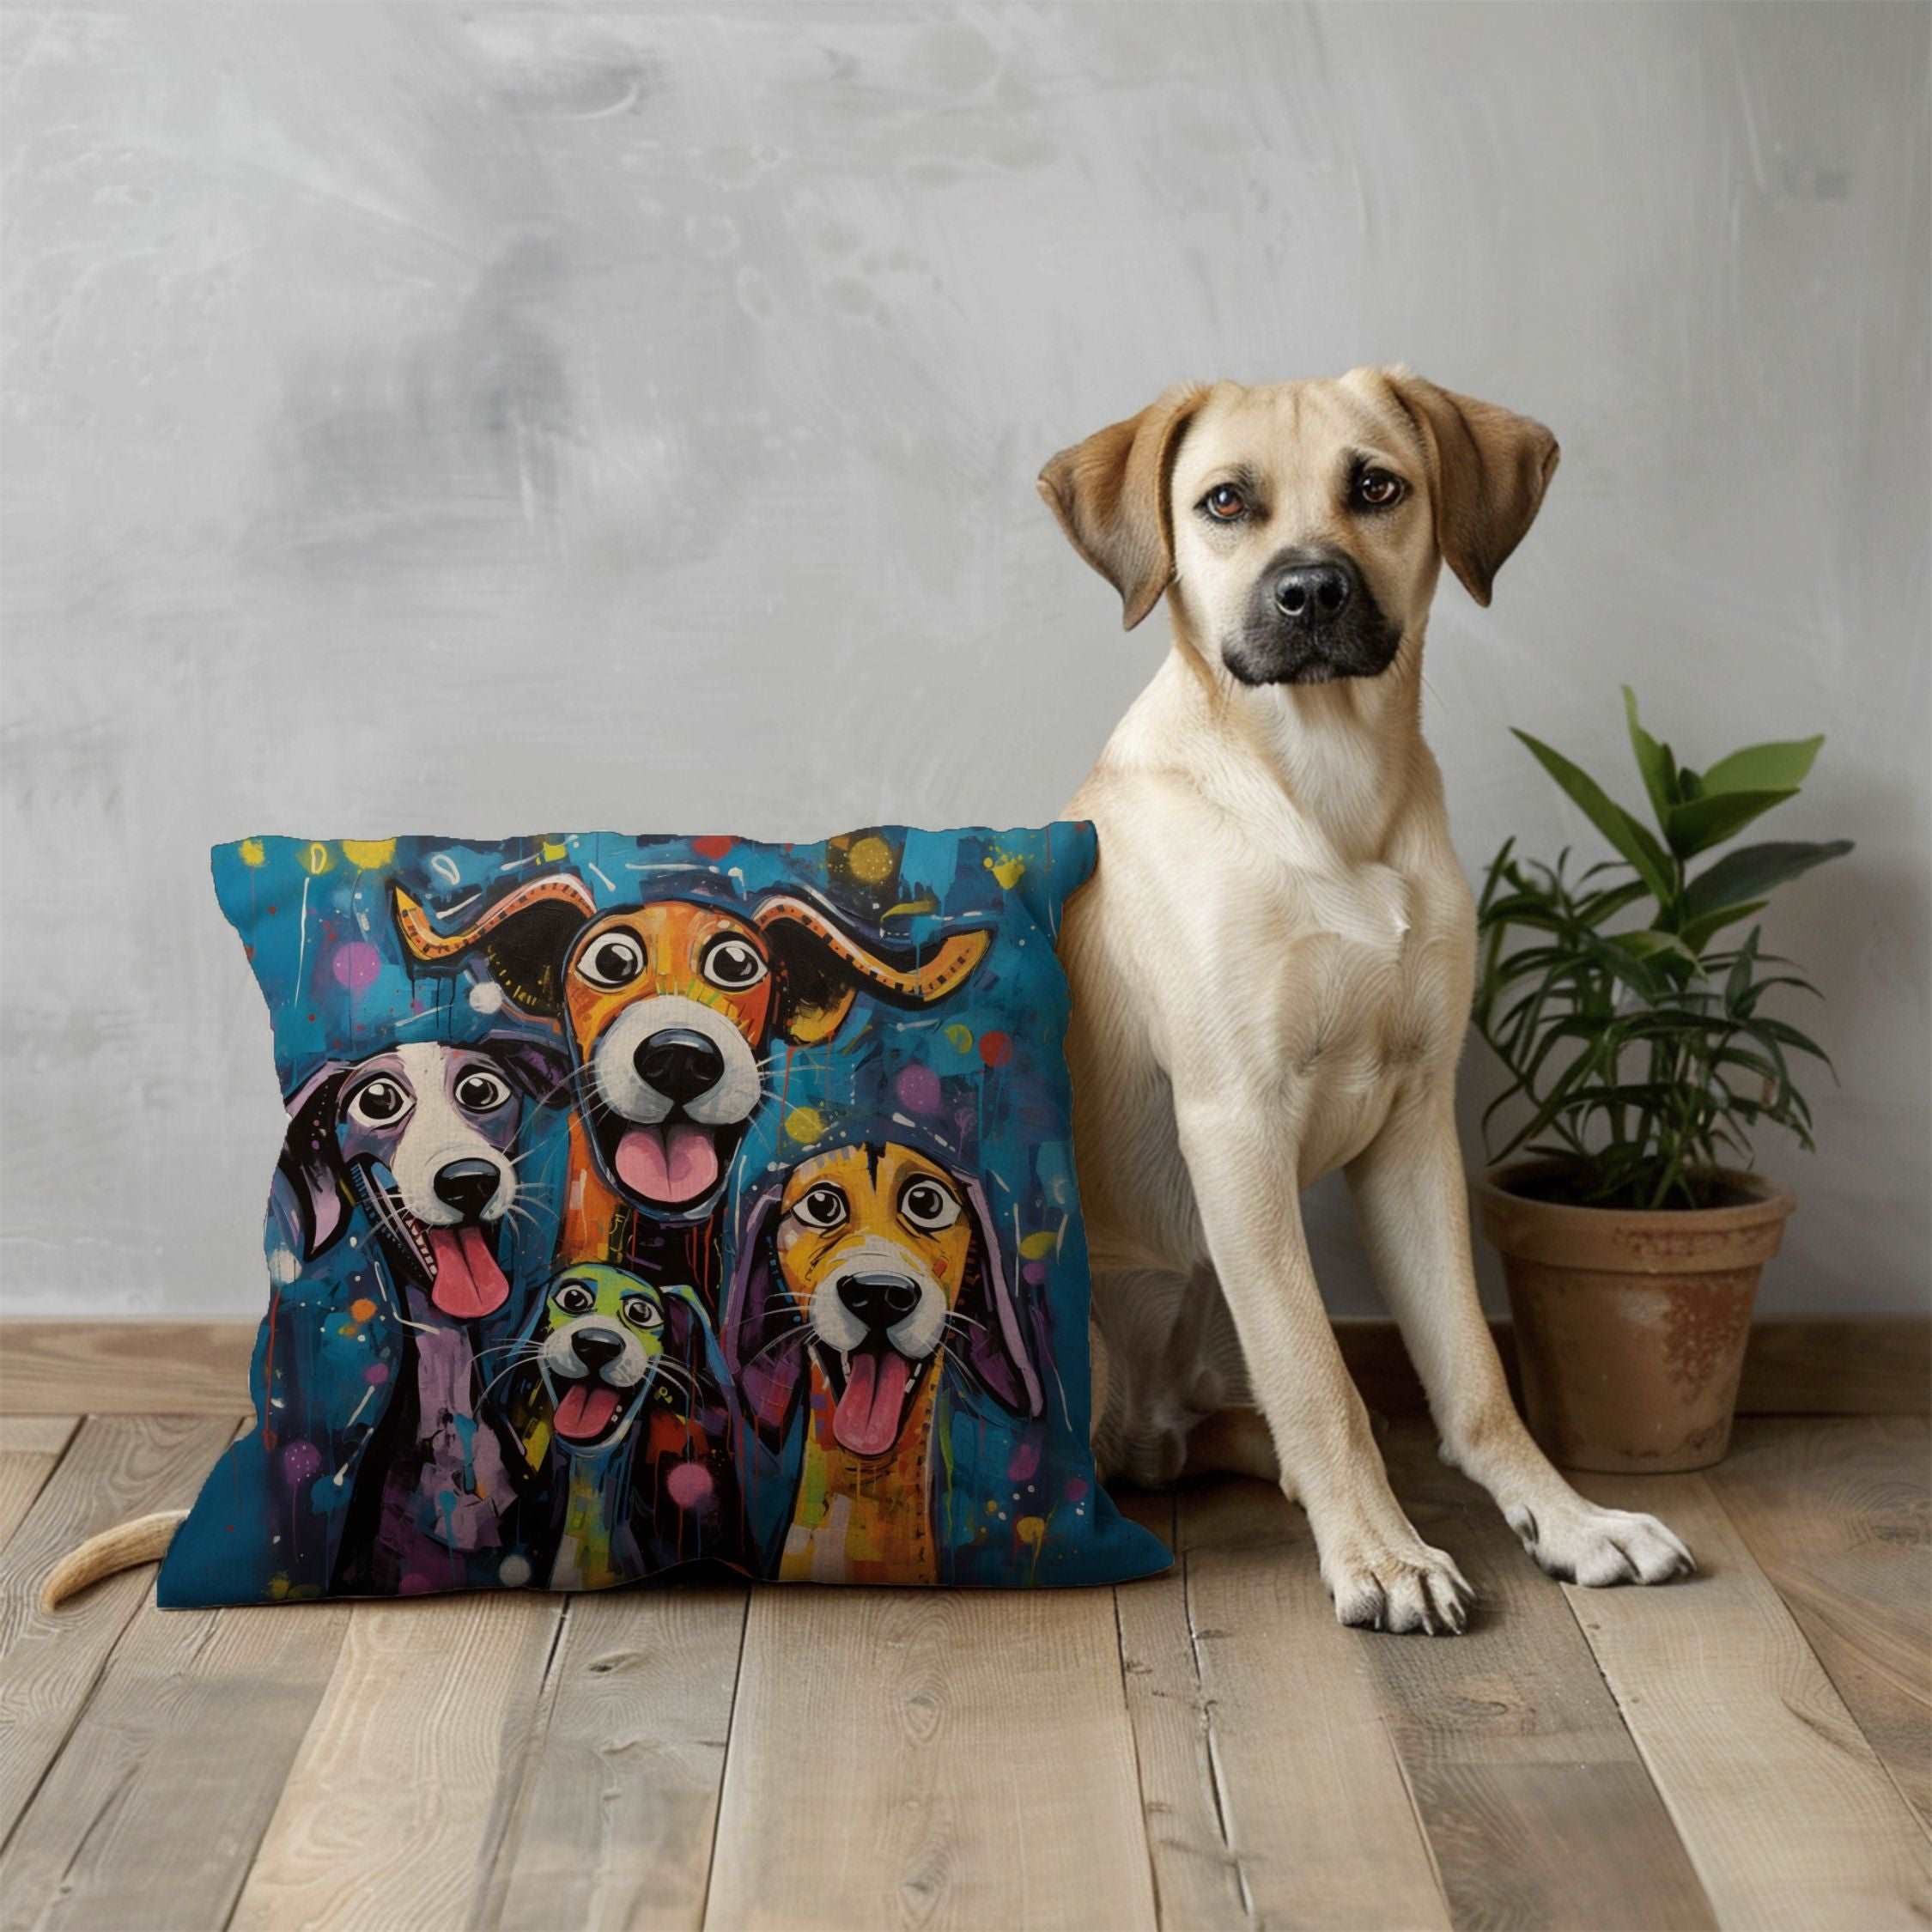 Dinner Time! Dog Art Original Design Throw Pillow - dinner-time-dog-art-original-design-premium-throw-pillow